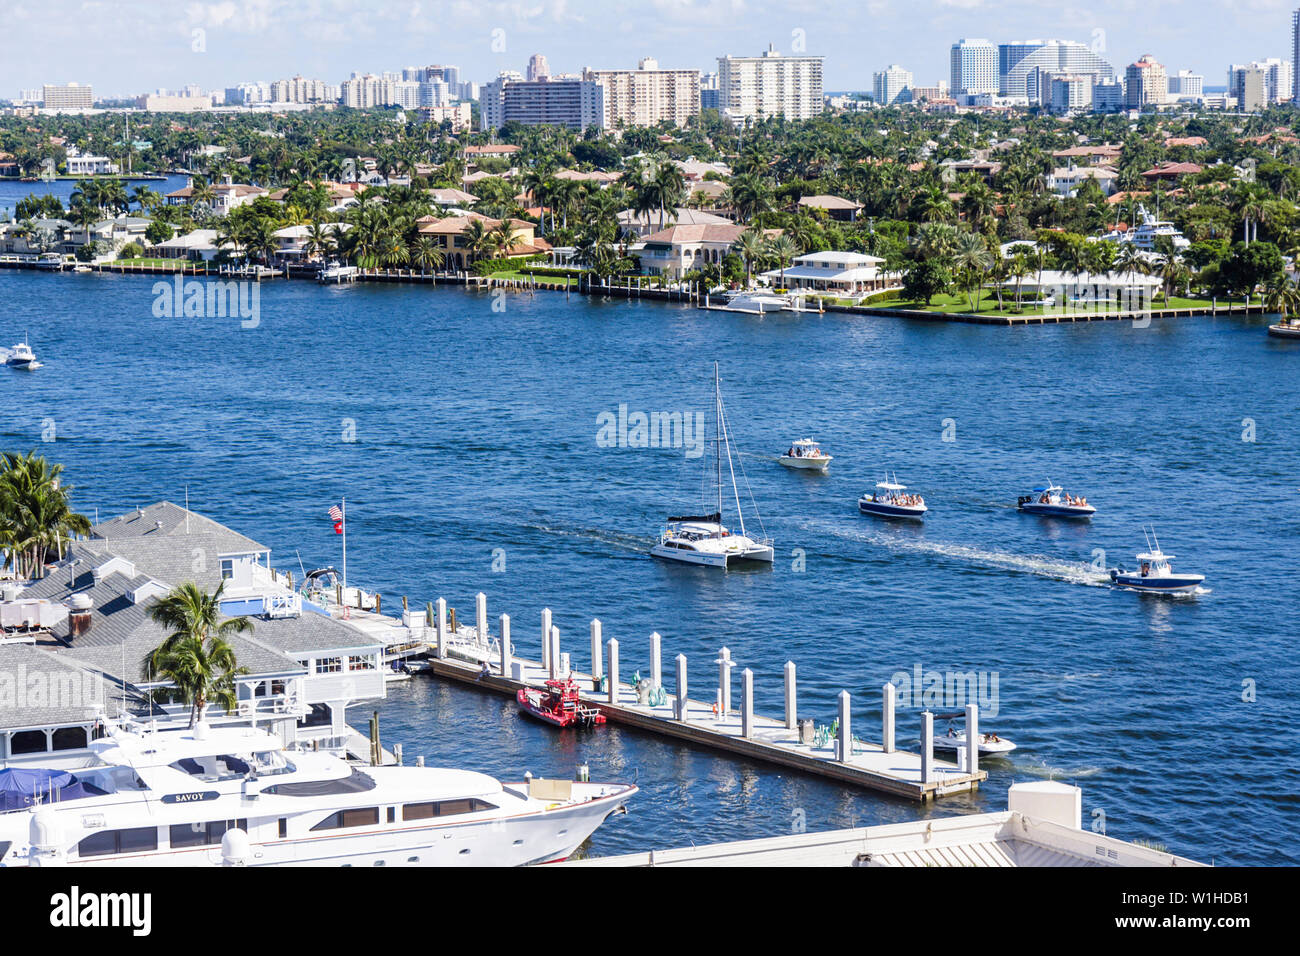 Fort Ft. Lauderdale Florida,Hilton Fort Lauderdale Marina,hotel hotels lodging inn motel motels,view,Intracoastal Stranahan River water,waterfront,man Stock Photo